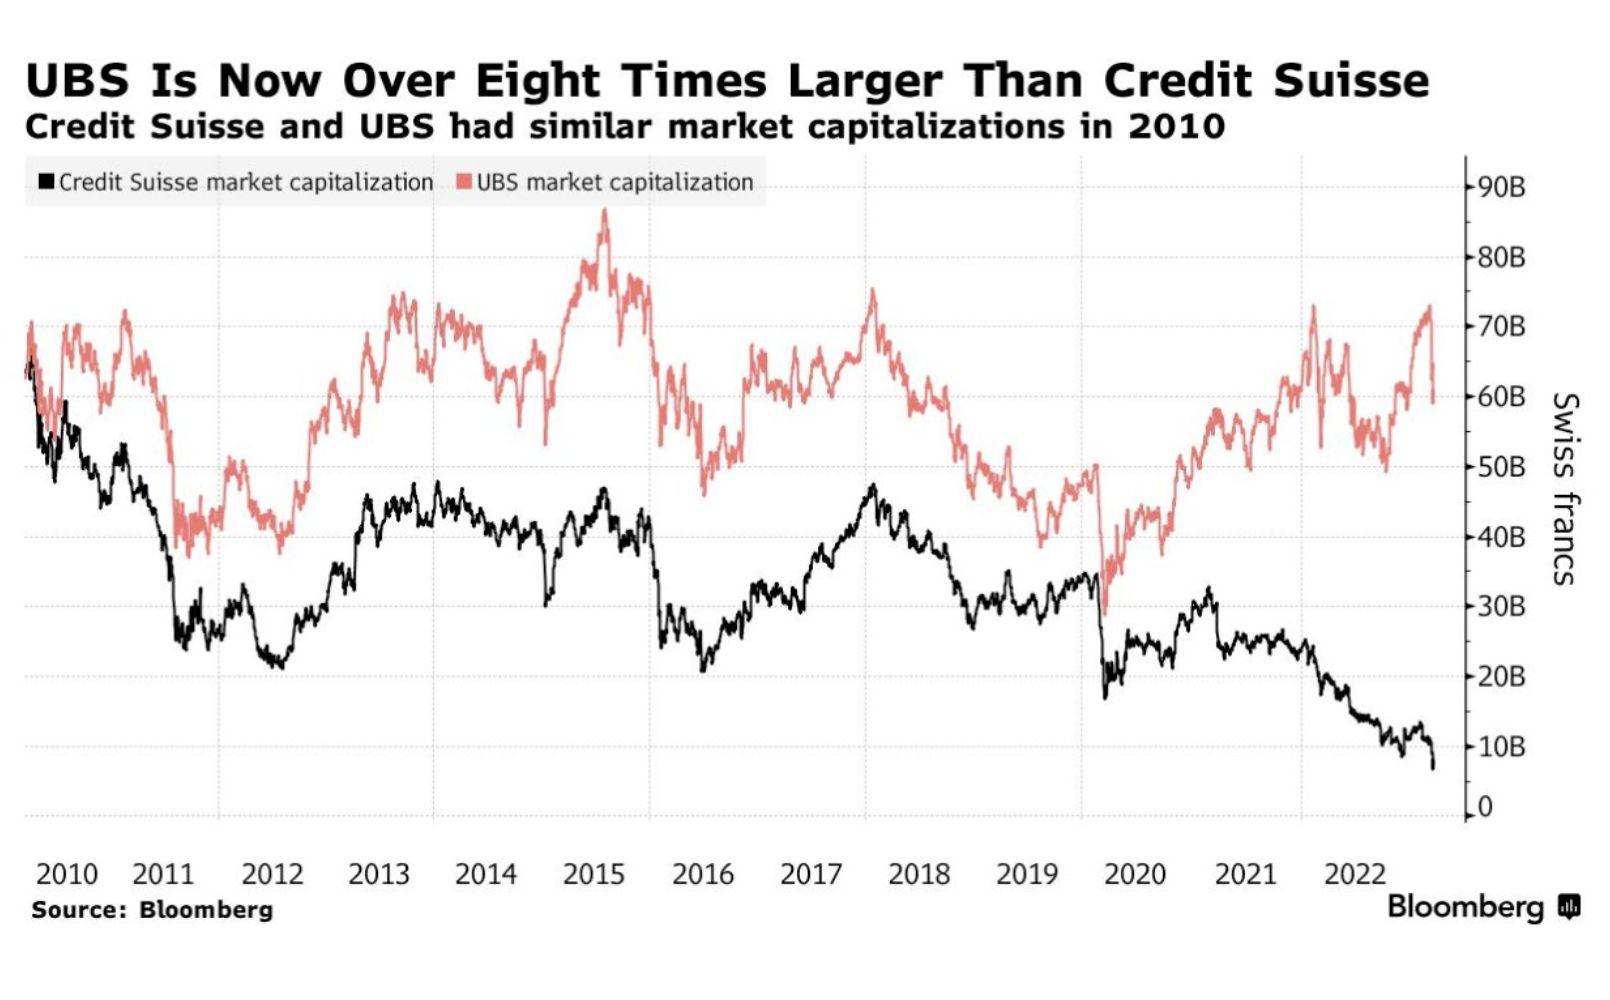 UBS and Credit Suisse market cap